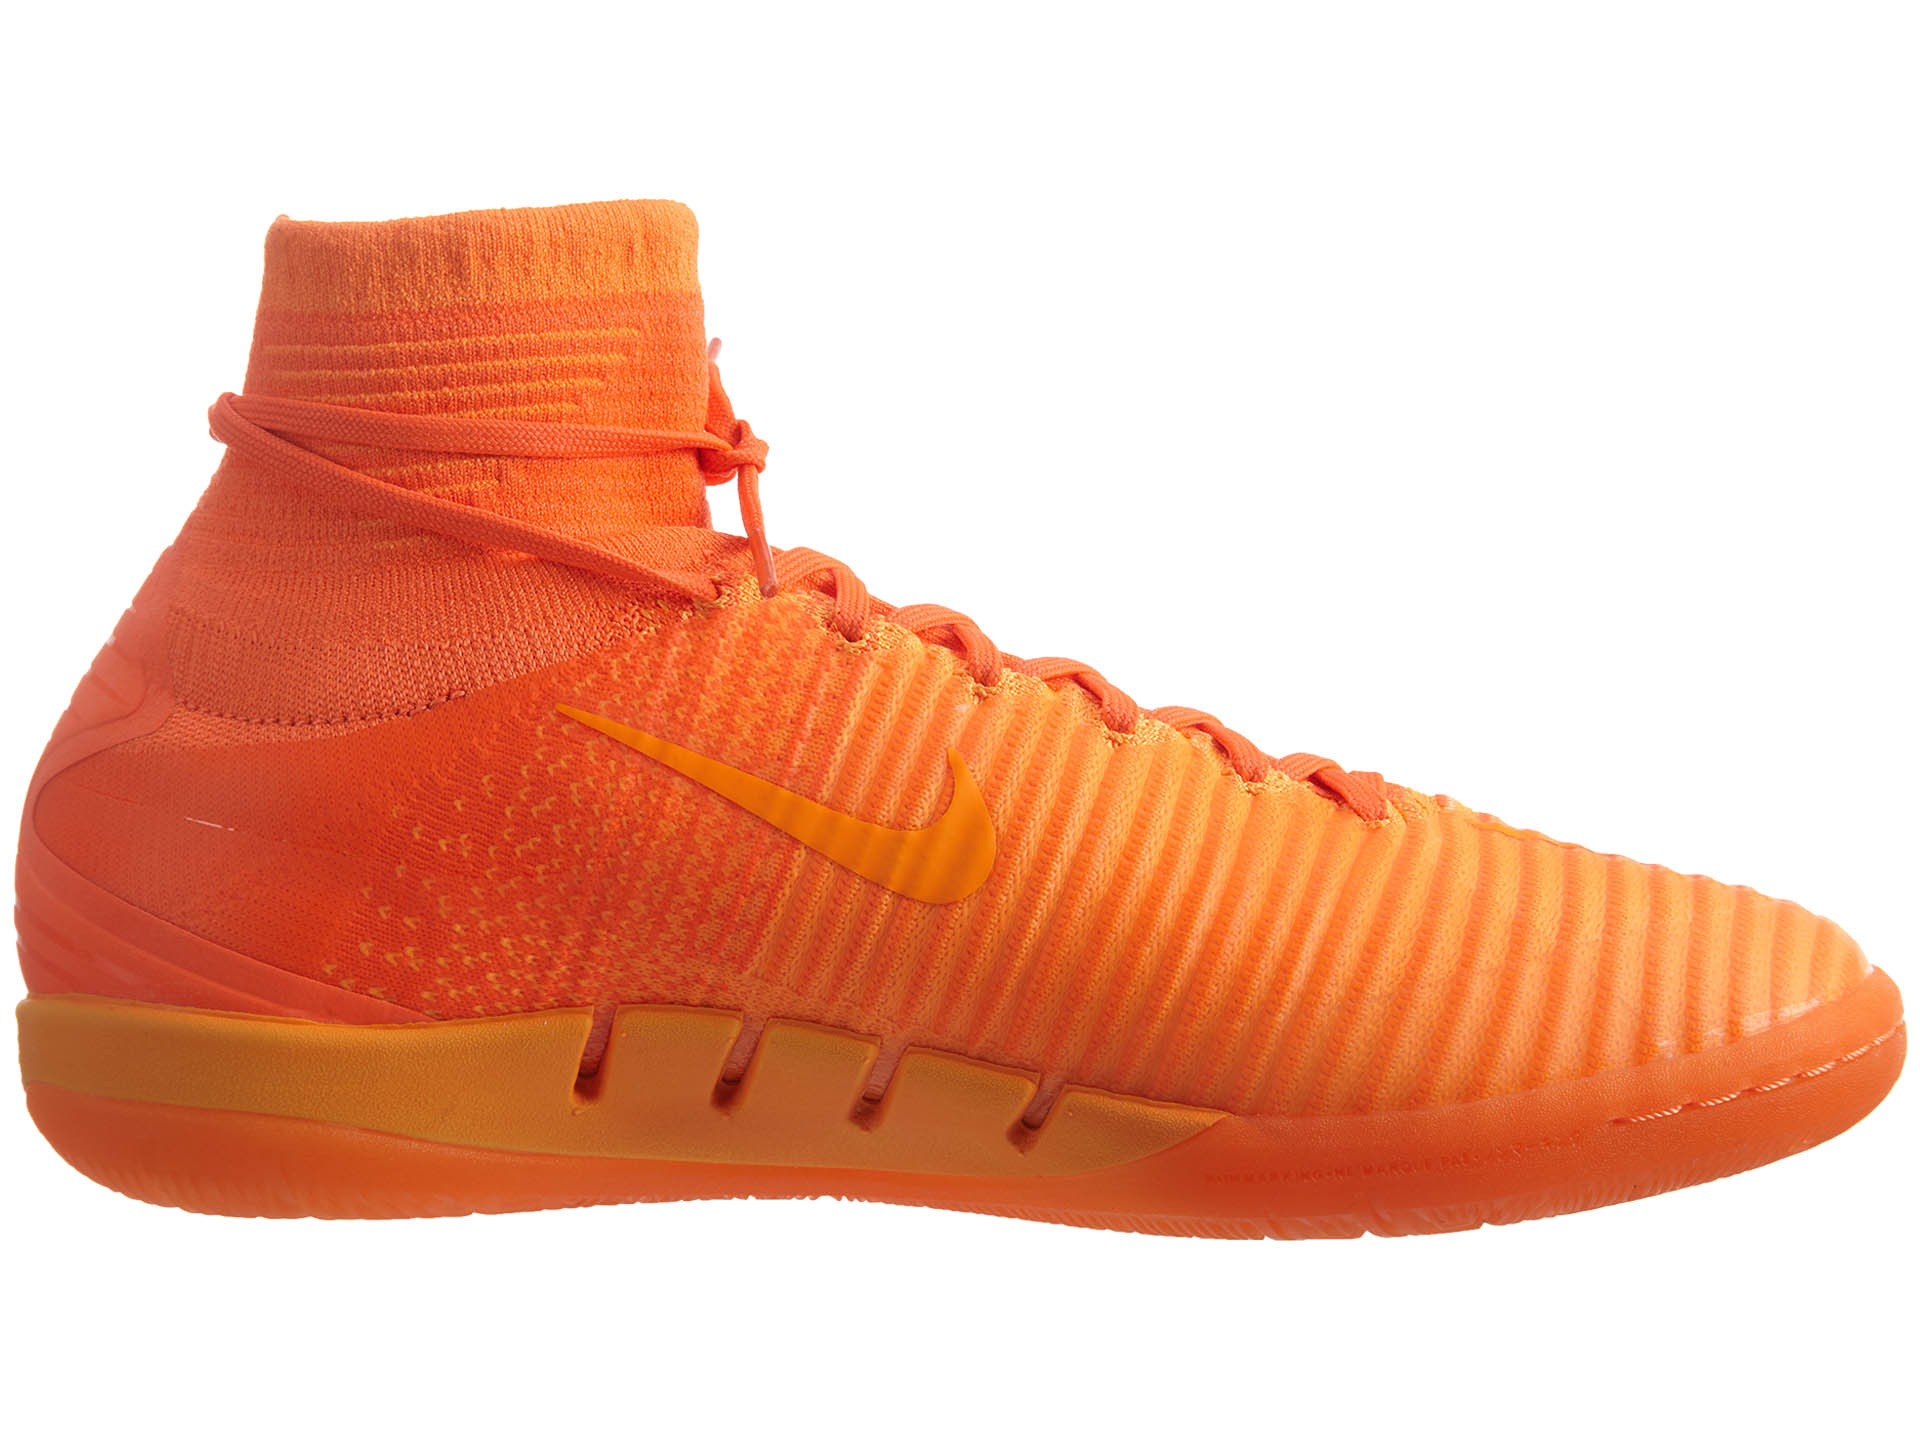 Nike Mercurialx Proximo Ii Ic Total Orange/Bright Ctrs-Hyper Crimson-P -  831976-888